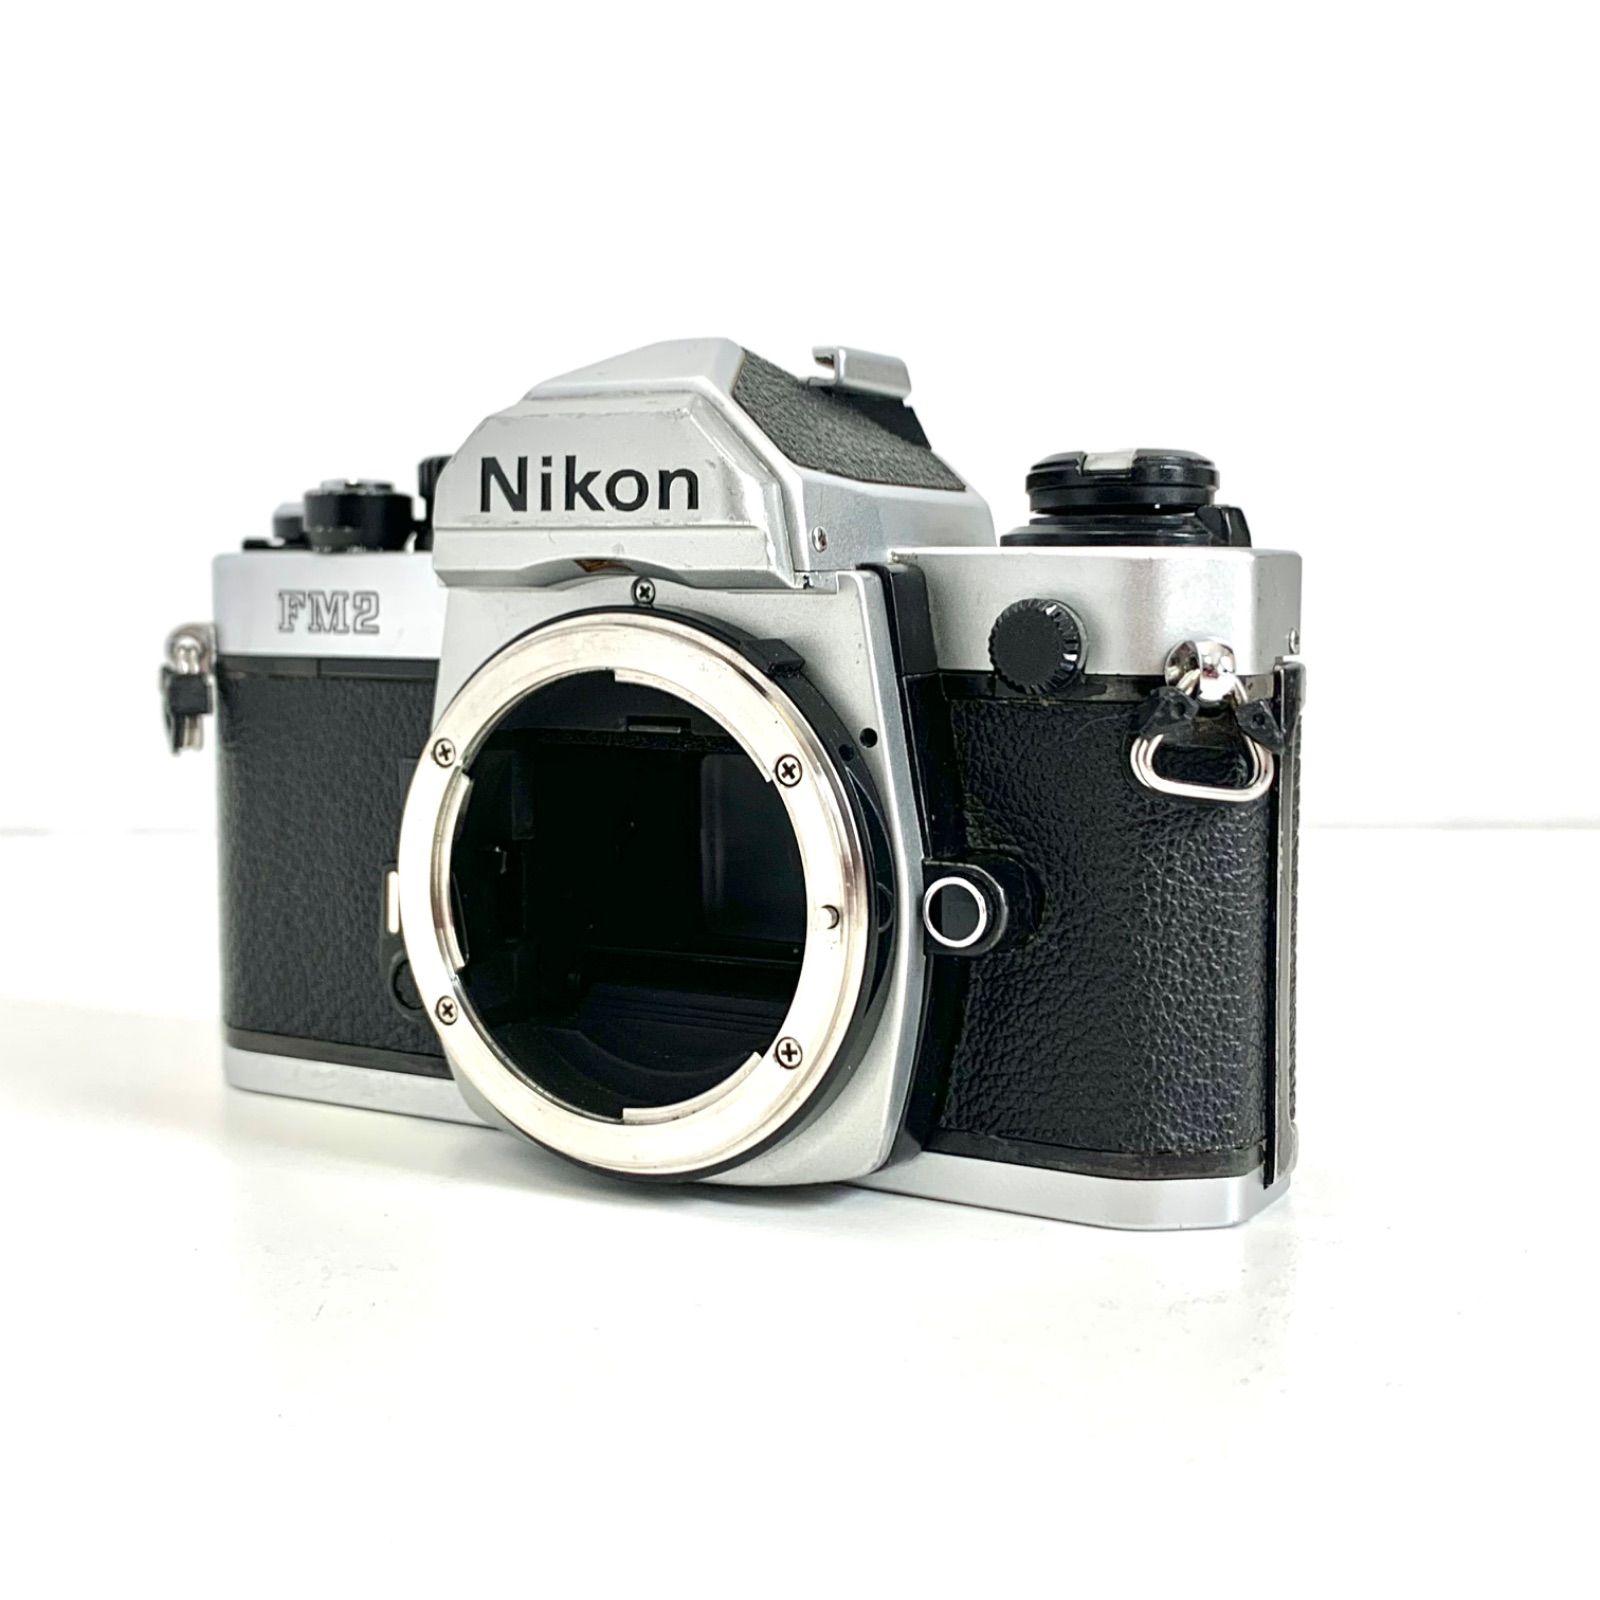 628061】 Nikon New FM2 シルバー ボディ 美品 - メルカリ